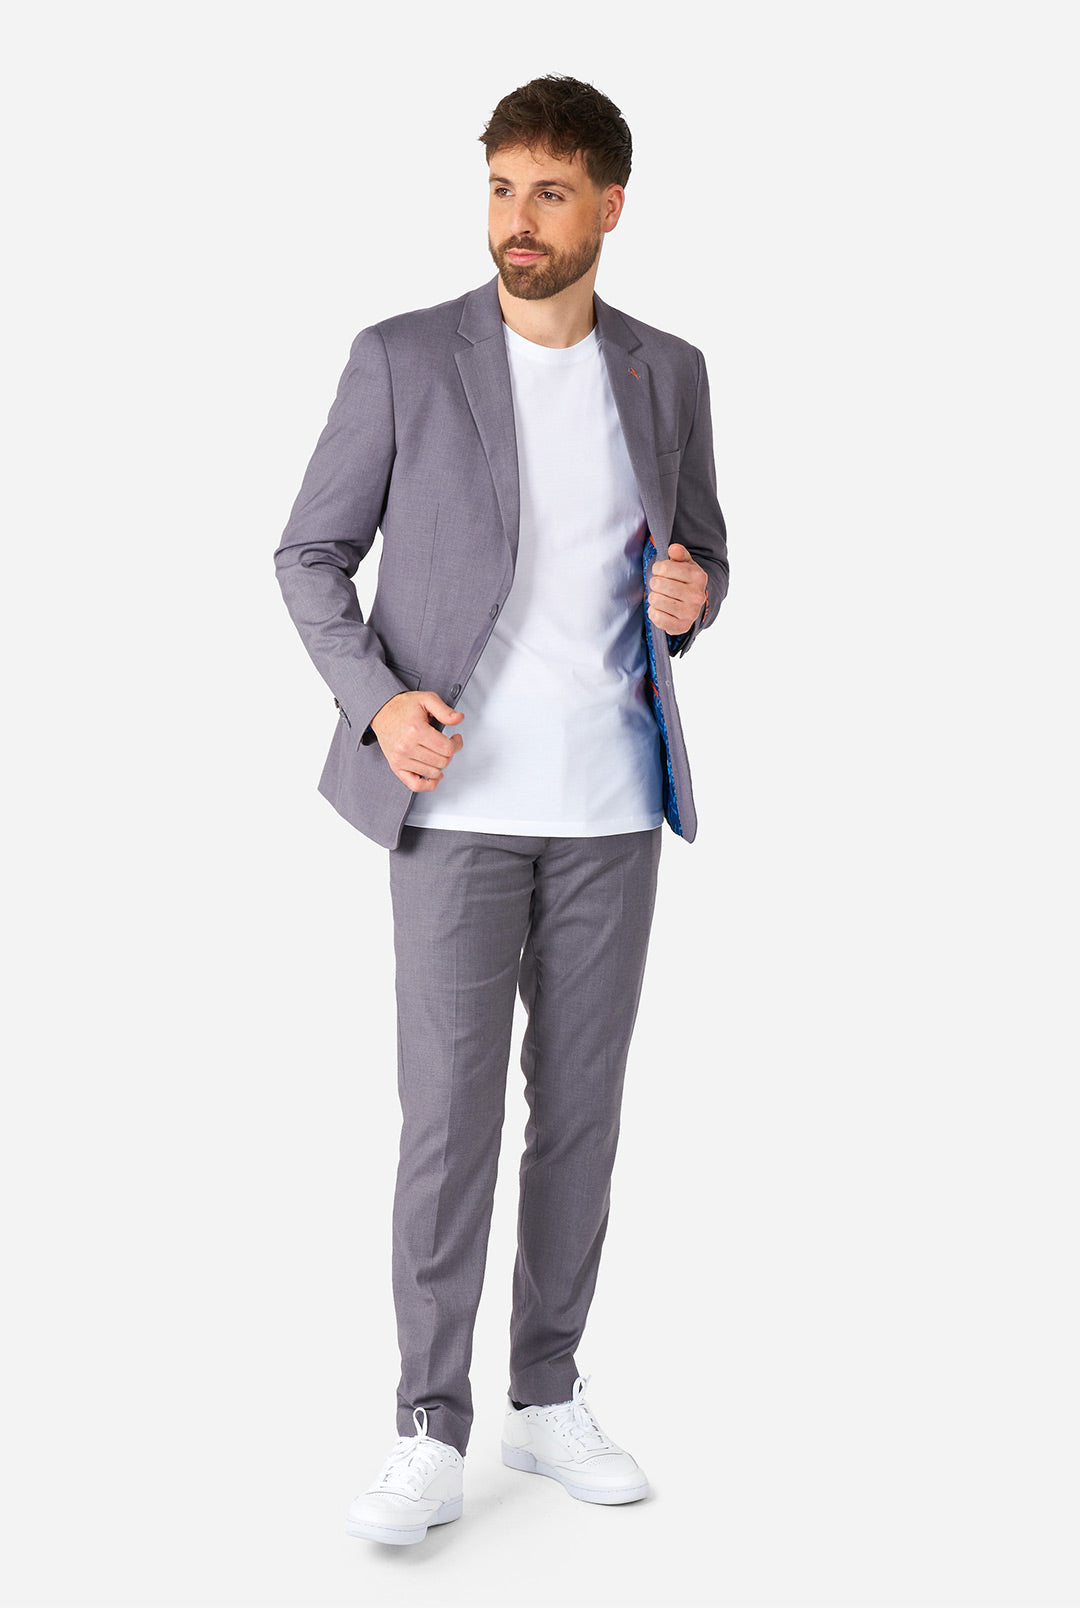 9 Fresh Ways To Wear A Suit | FashionBeans | Smart casual style, Mens fashion  suits business, Mens fashion suits